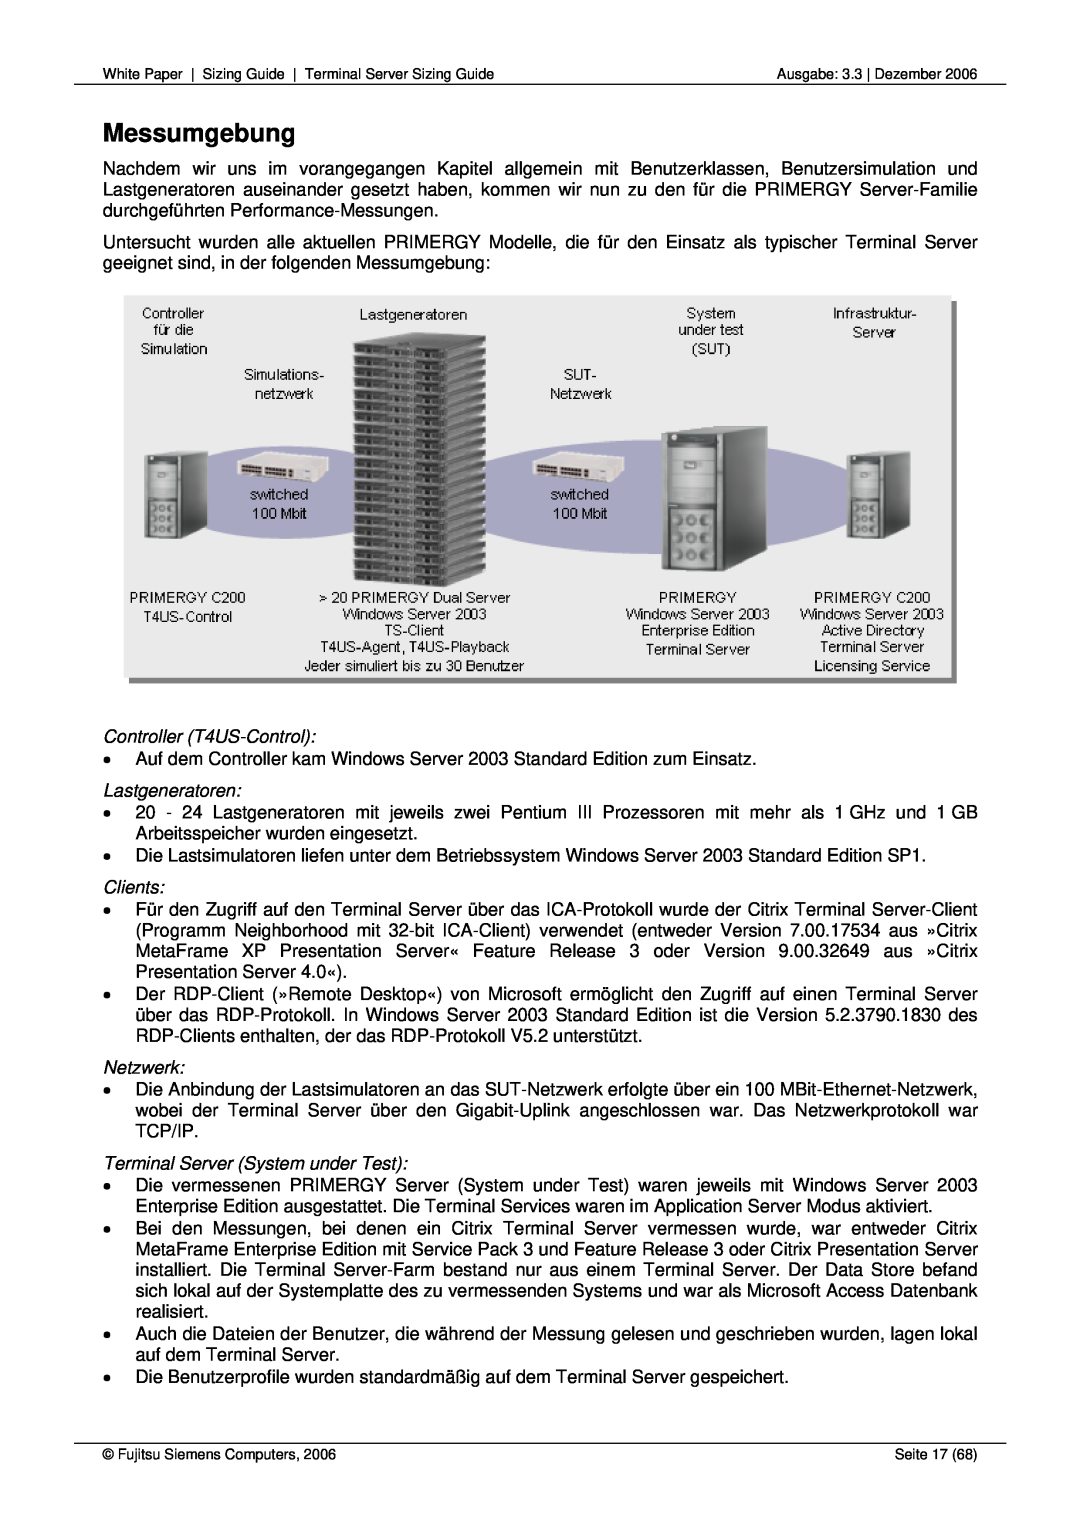 Fujitsu 68 Messumgebung, Controller T4US-Control, Lastgeneratoren, Clients, Netzwerk, Terminal Server System under Test 